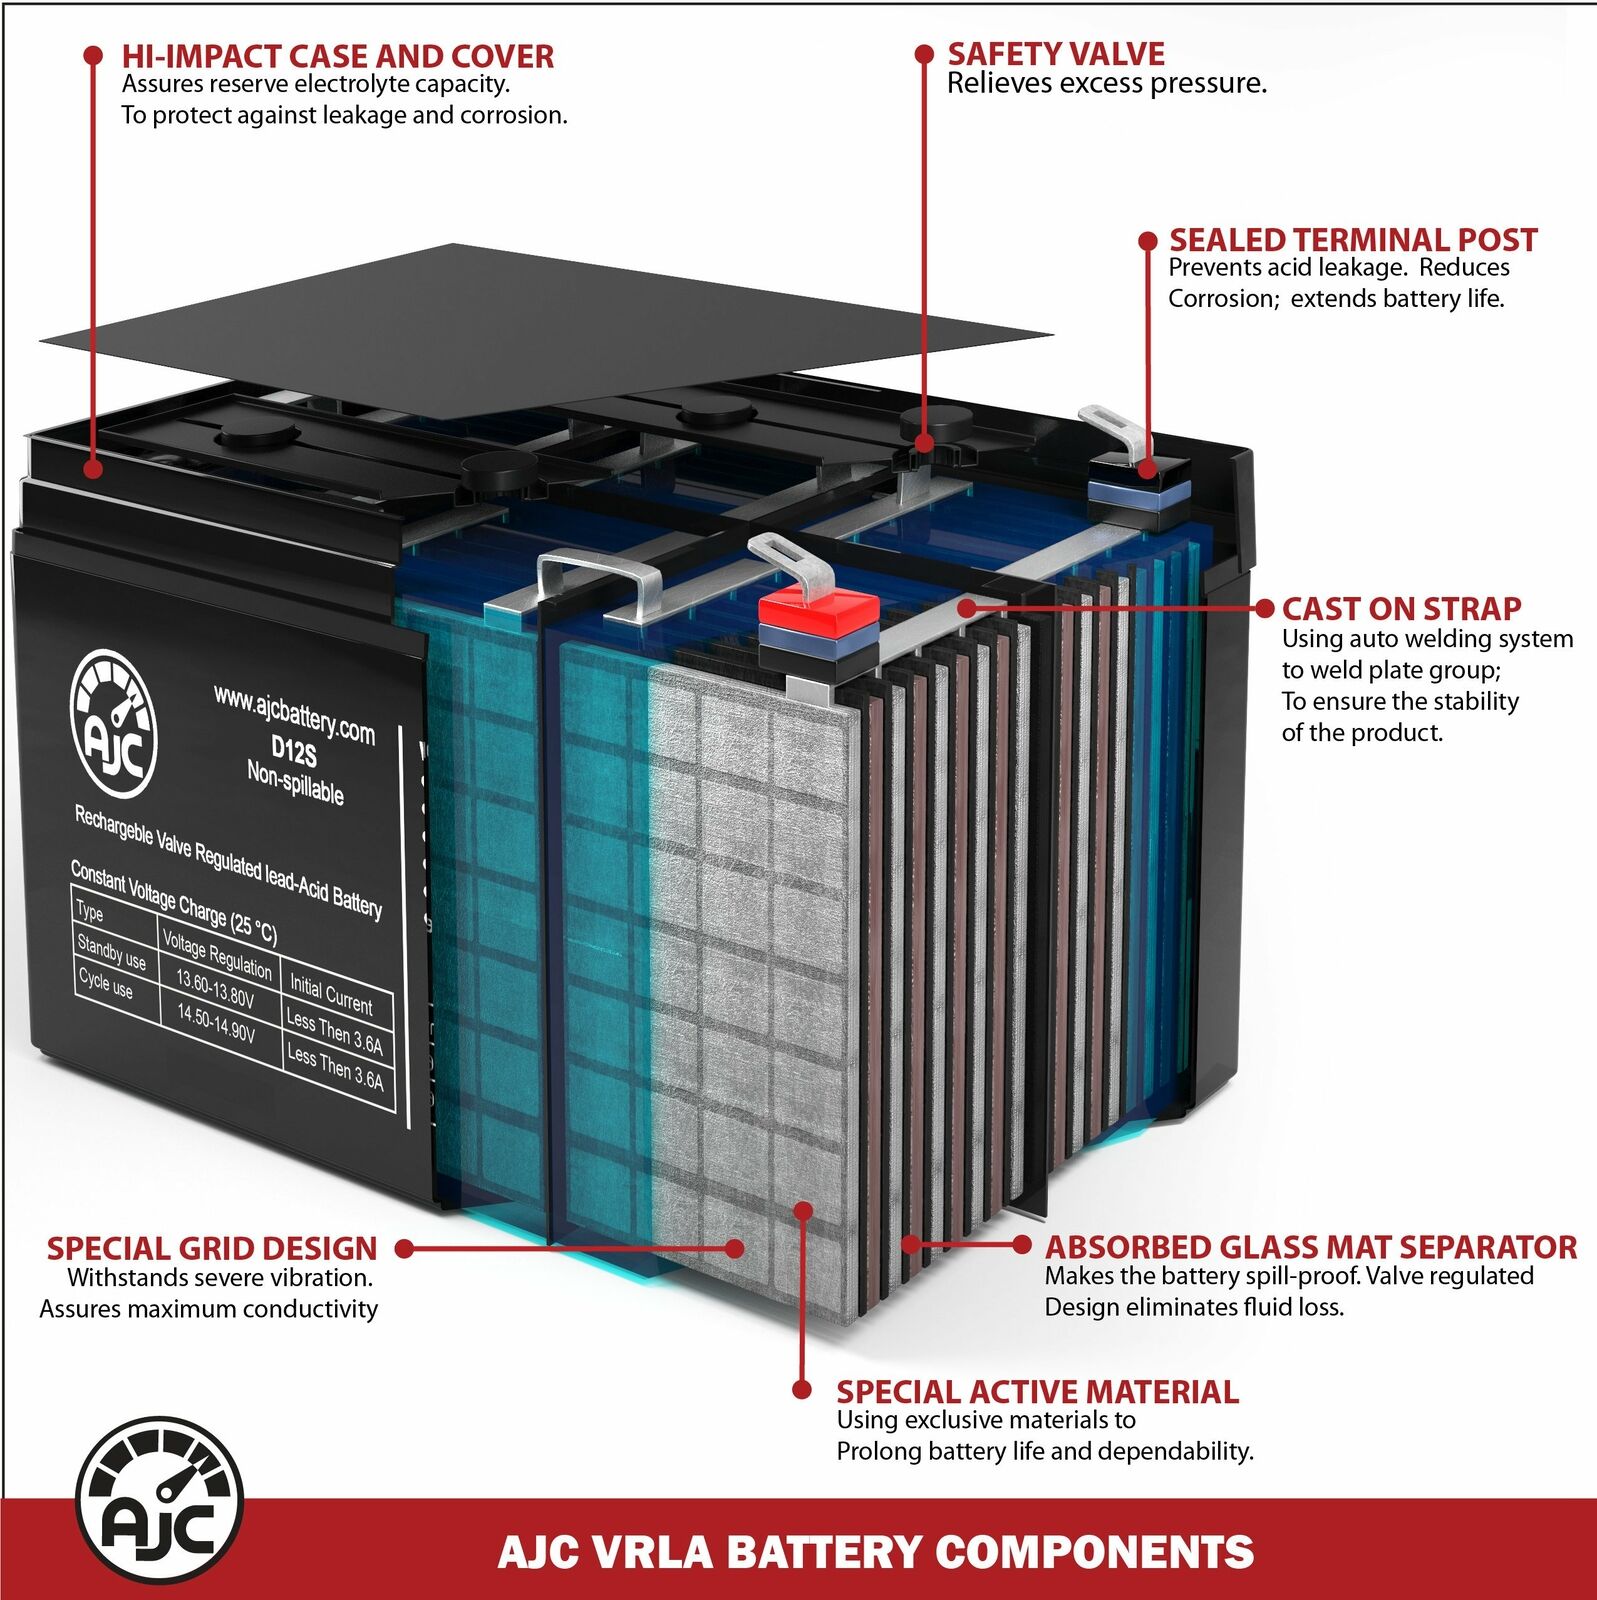 GCP Products 41B822 12V 5Ah Garage Door Replacement Battery